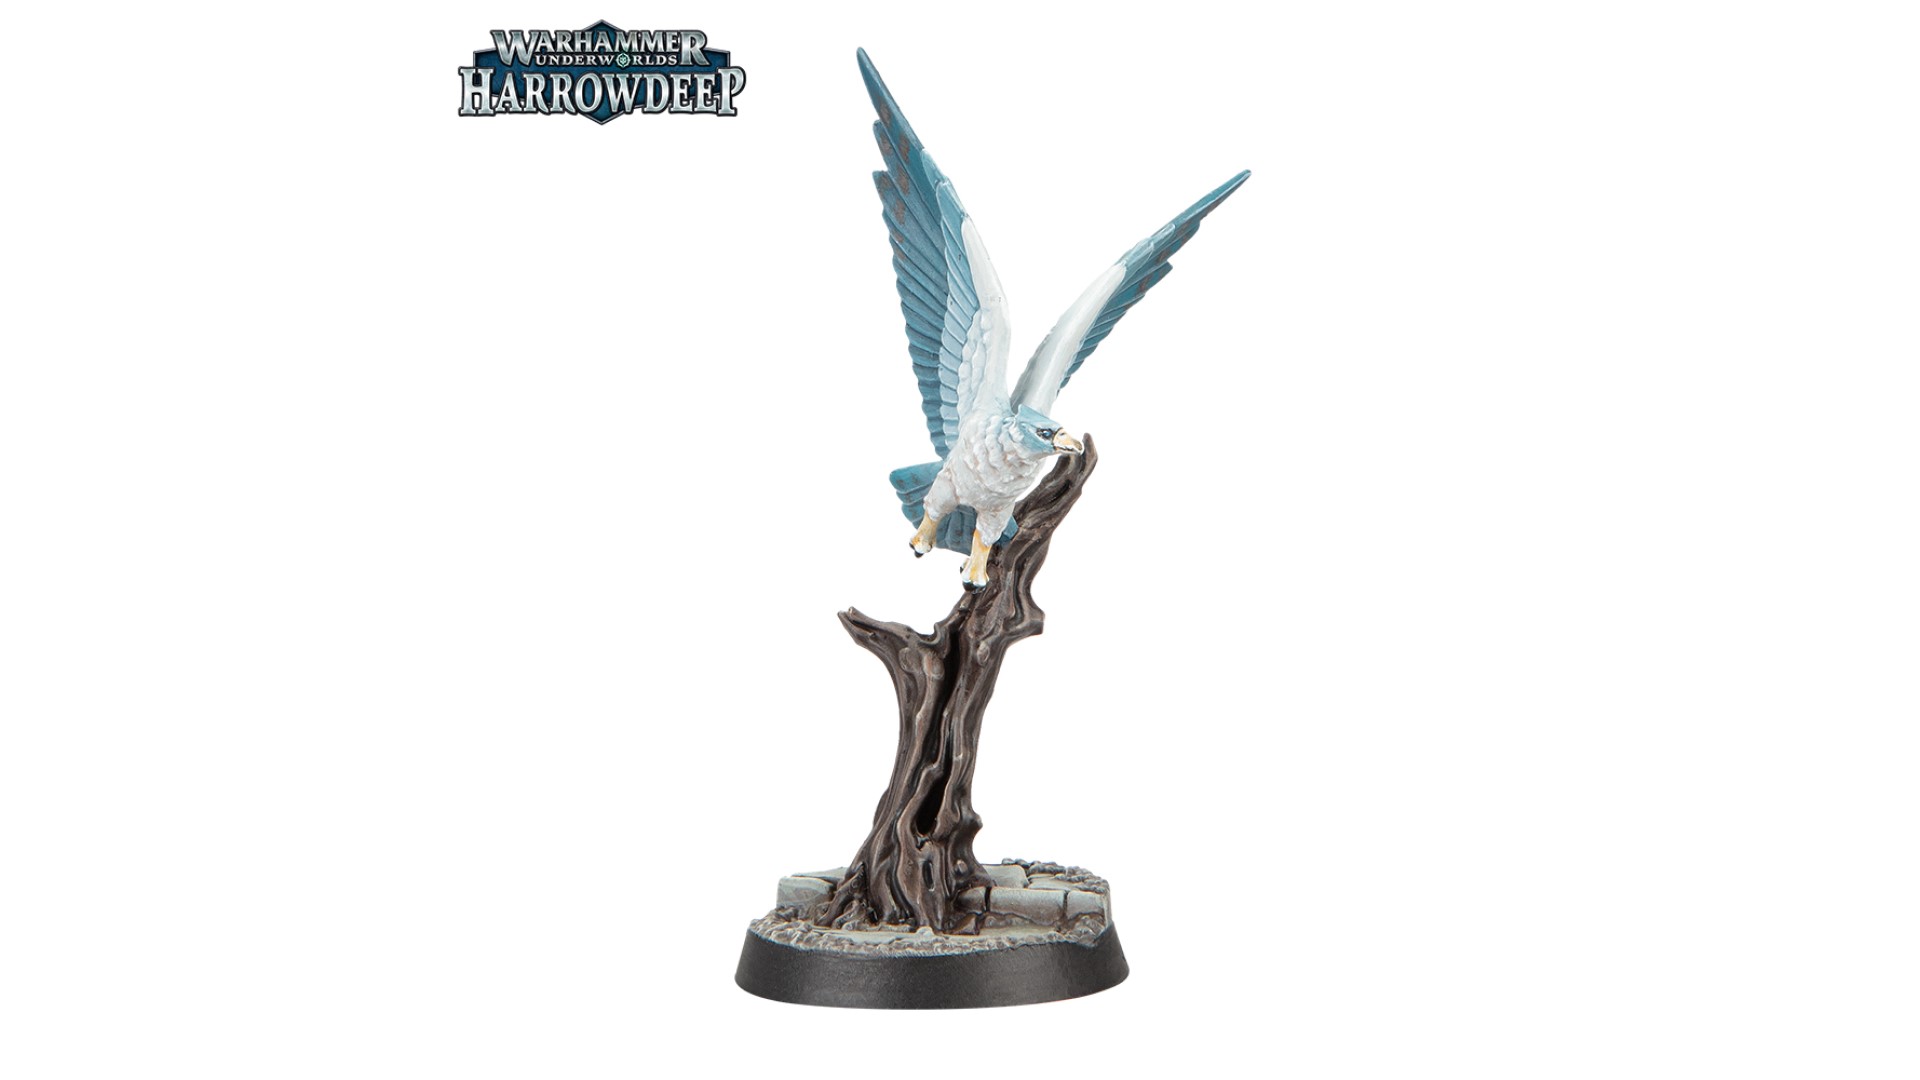 Warhammer Underworlds: Harrowdeep revealed - Warhammer Community photo of a Stormcast Eternals aetherwing model